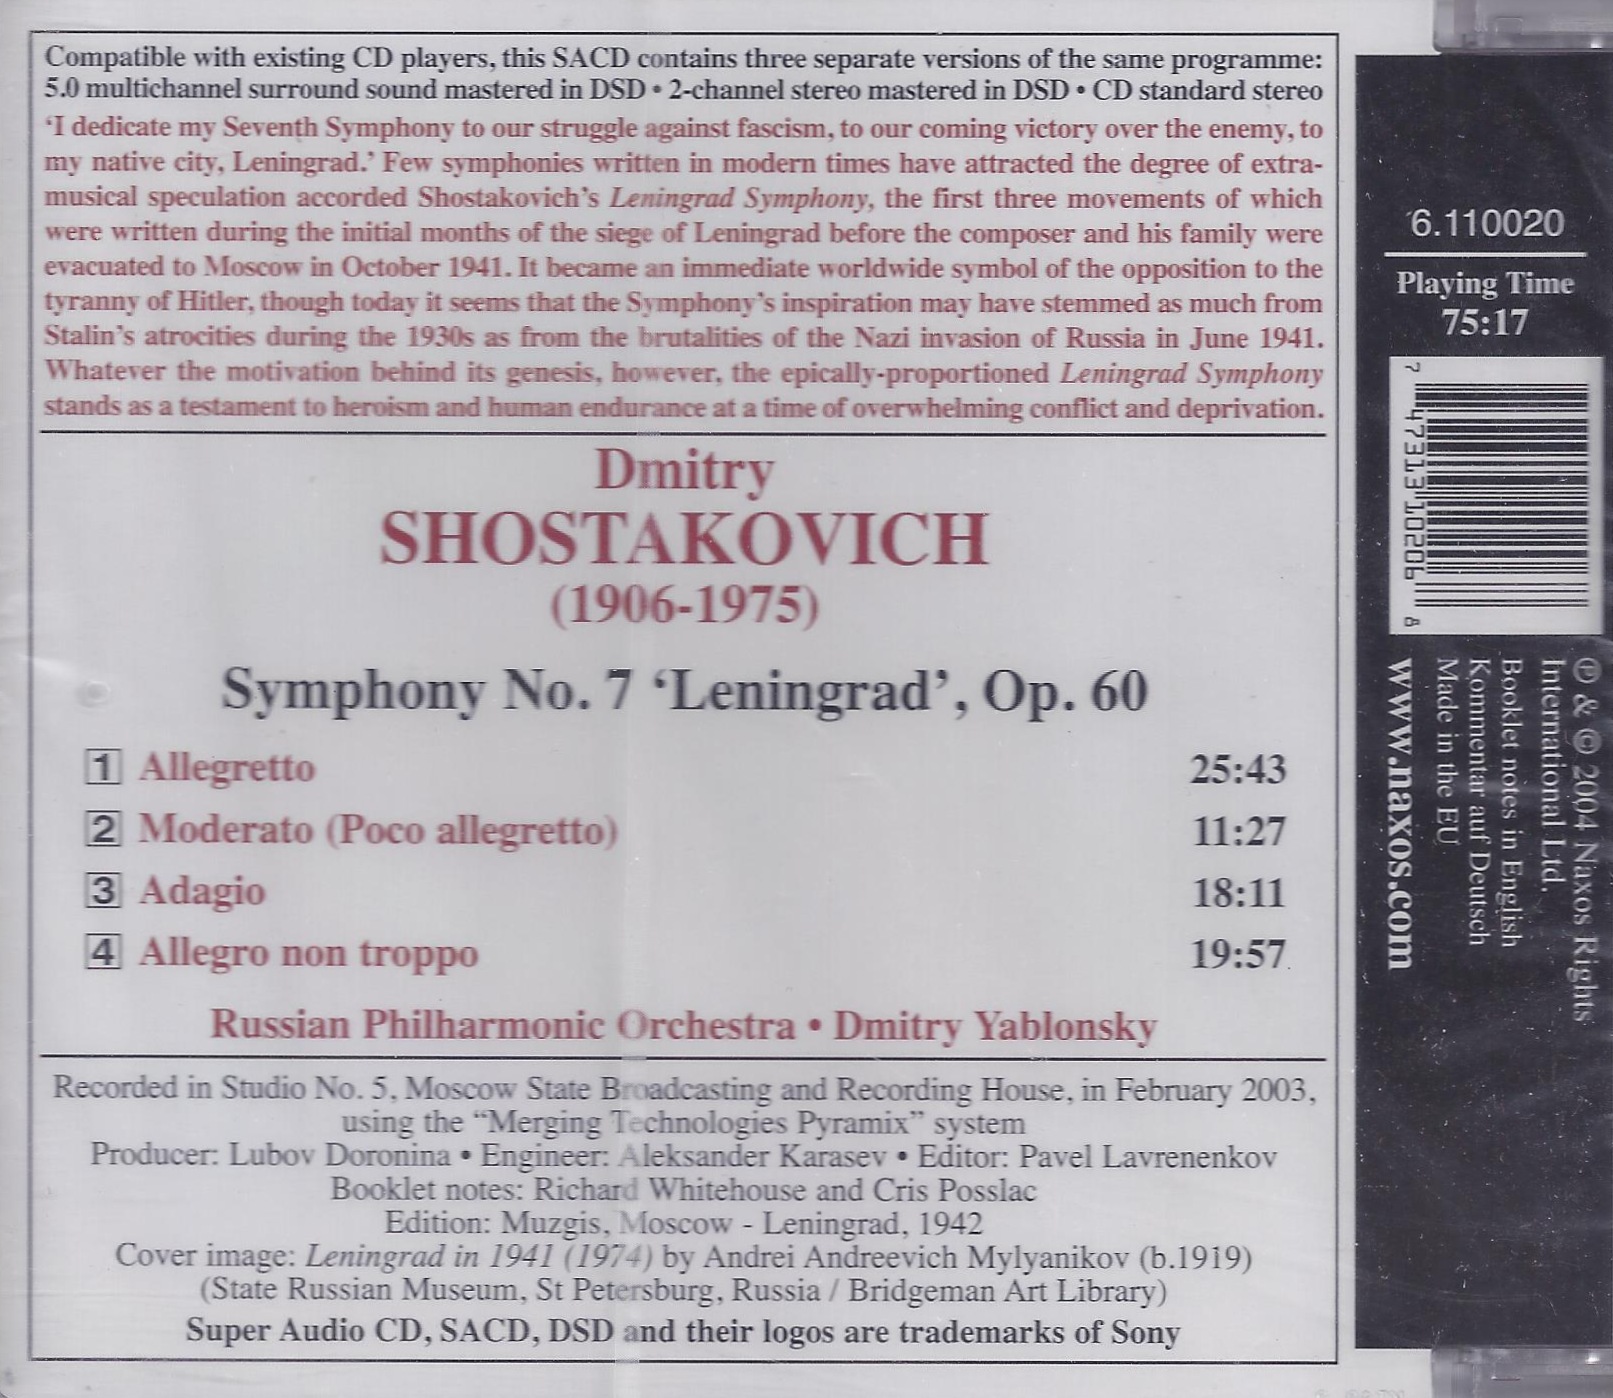 SHOSTAKOVICH: Symphony no. 7 "LENINGRAD" - slide-1